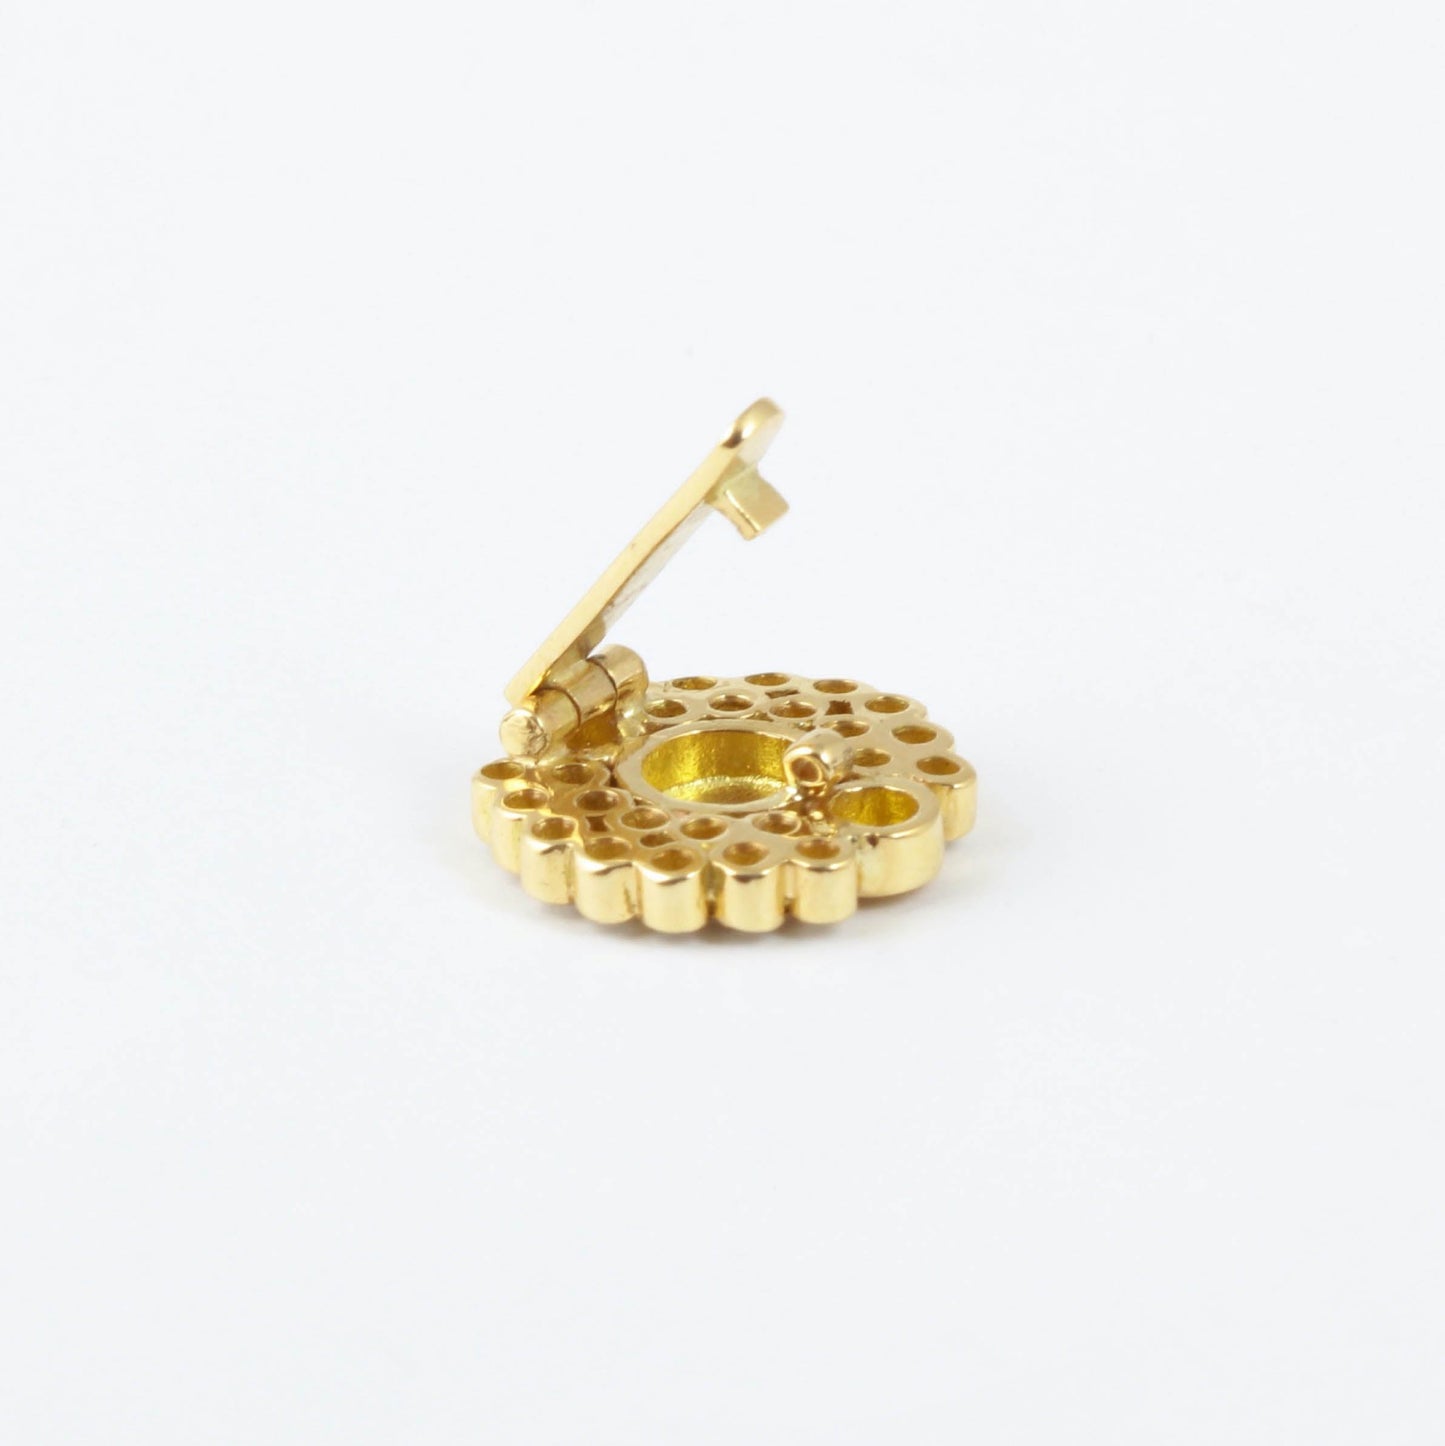 The Smaritha Gold and Diamond Pendant by Rasvihar